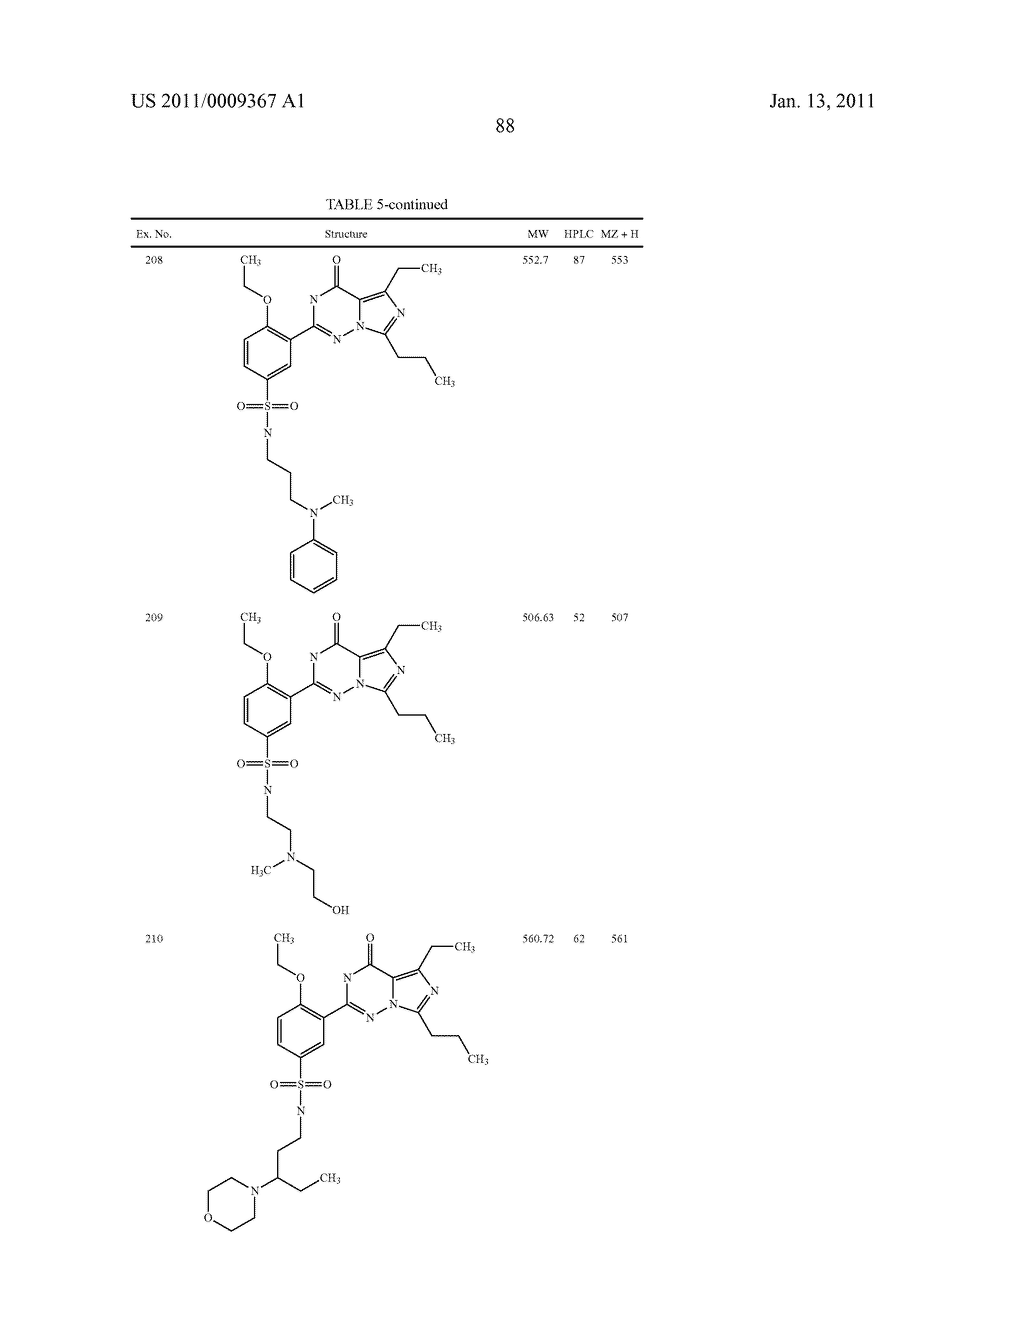 2-PHENYL SUBSTITUTED IMIDAZOTRIAZINONES AS PHOSPHODIESTERASE INHIBITORS - diagram, schematic, and image 89